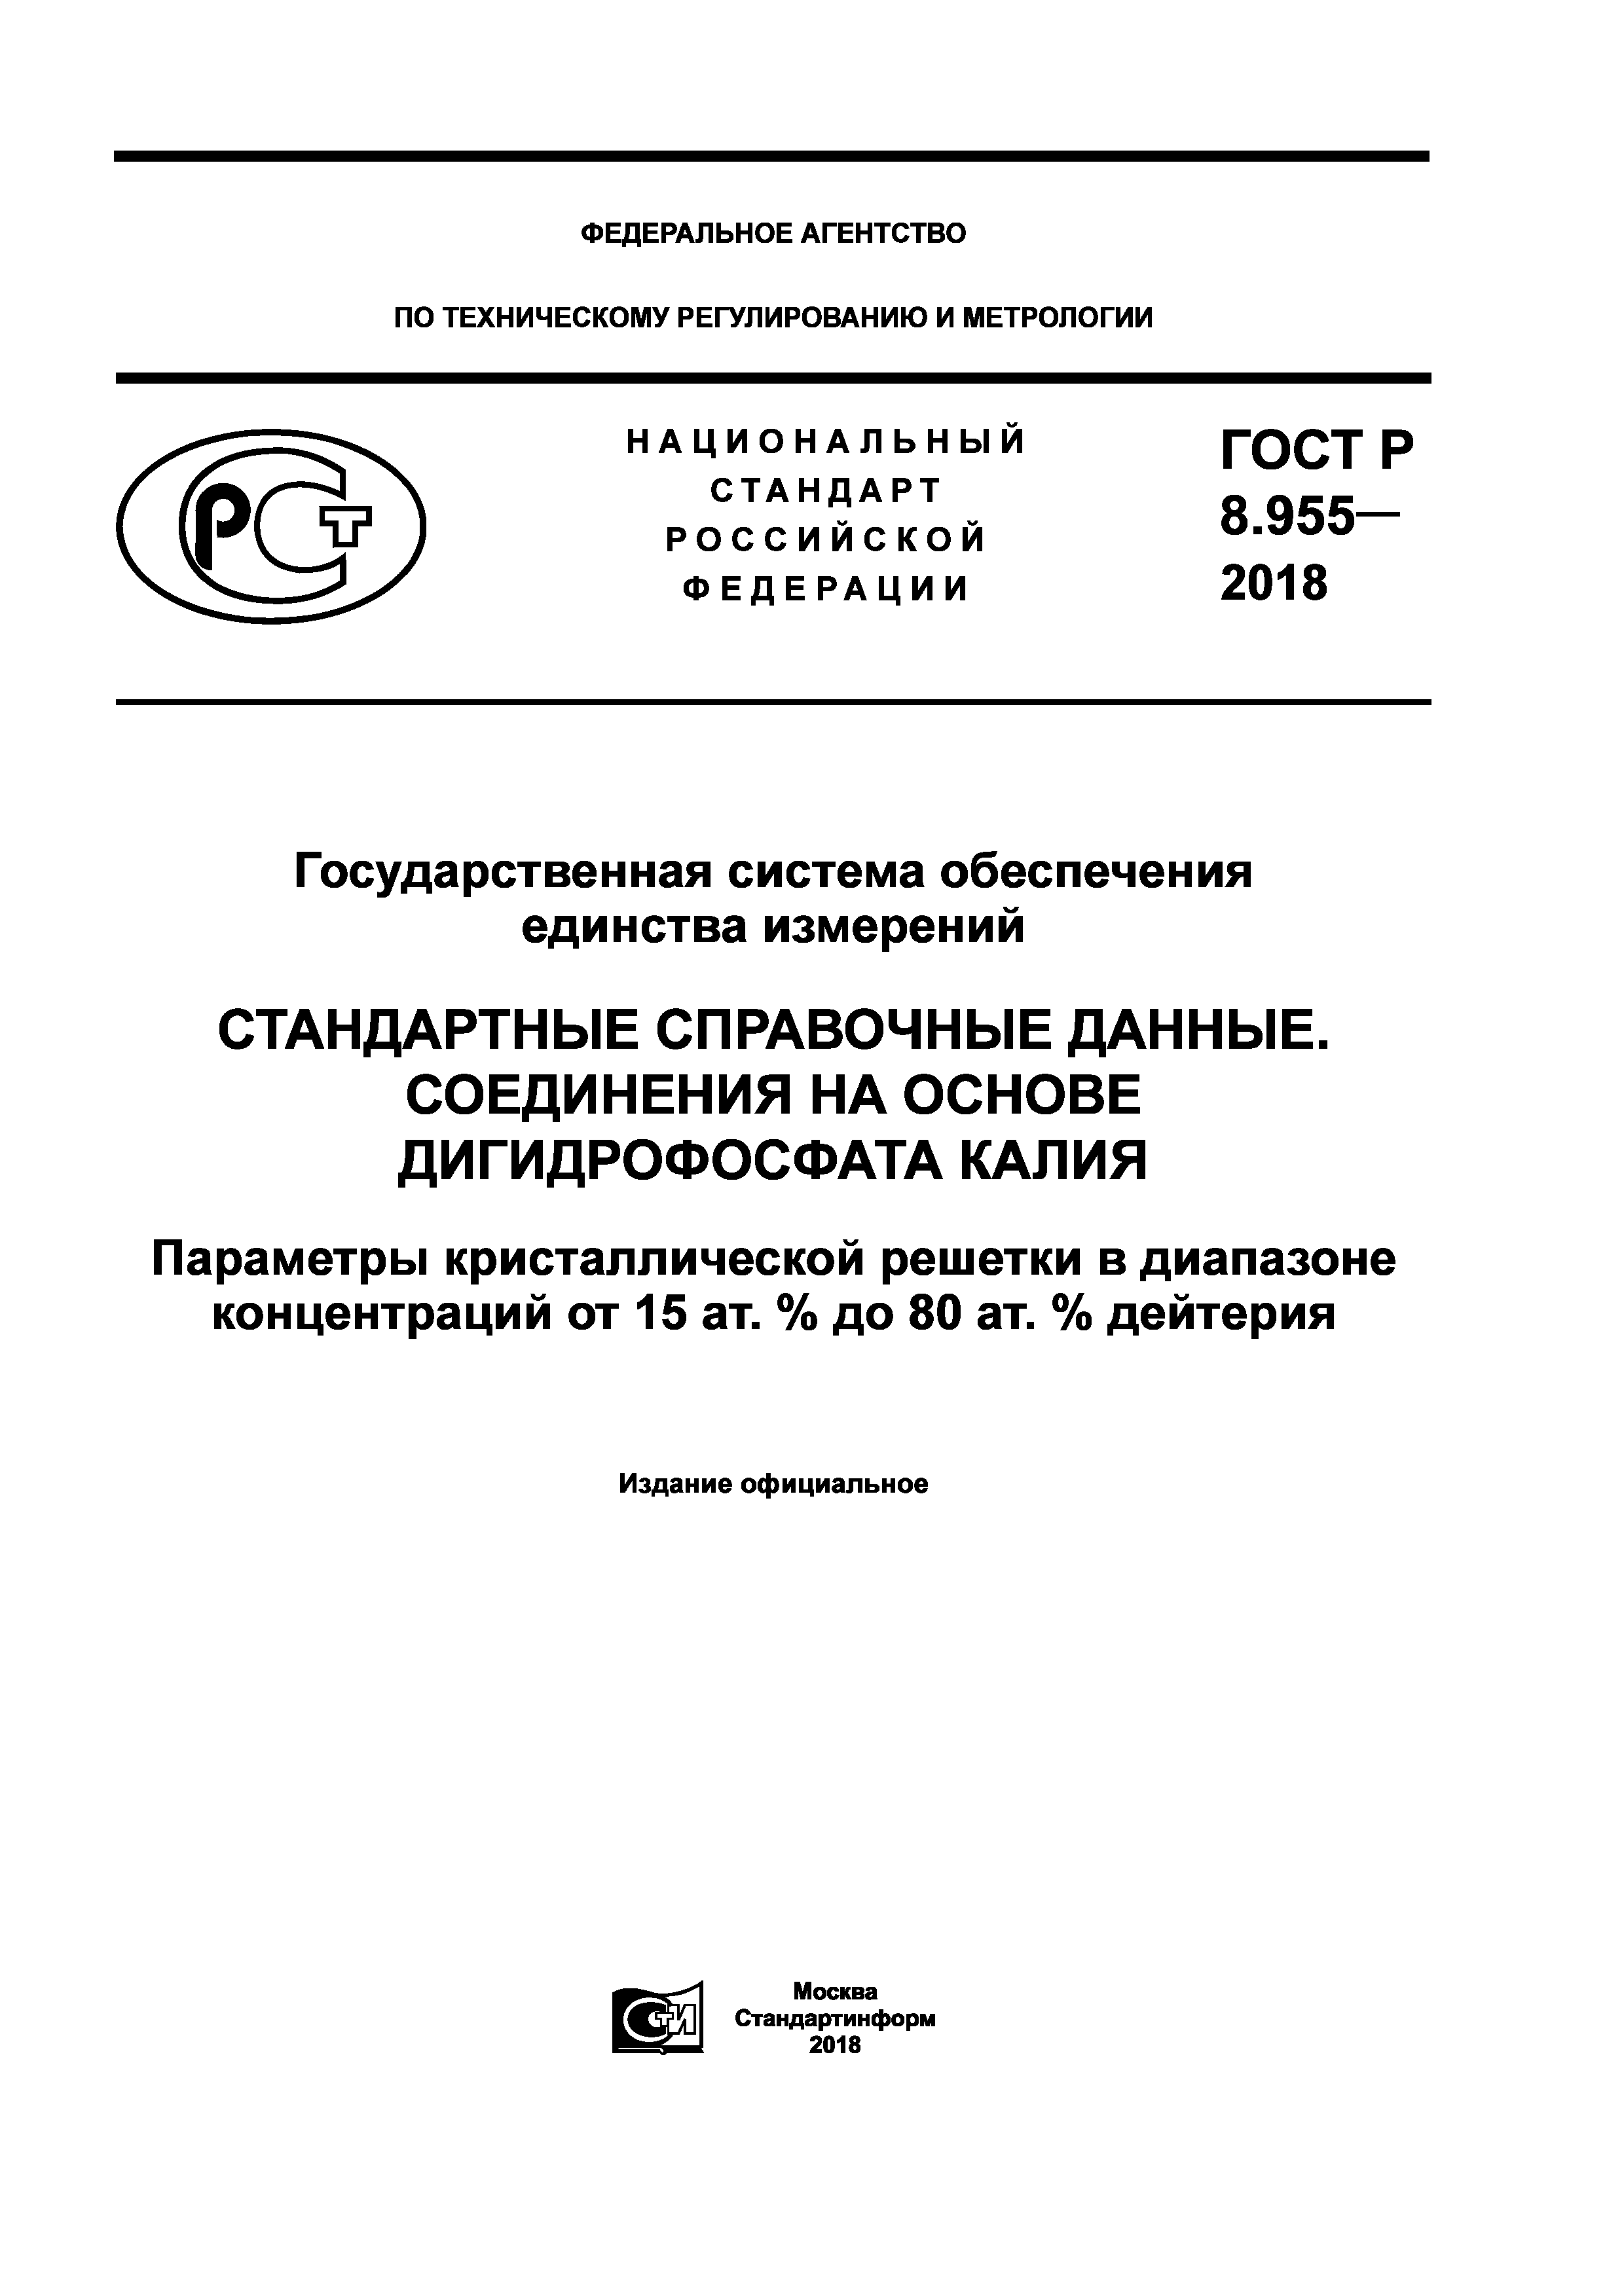 ГОСТ Р 8.955-2018